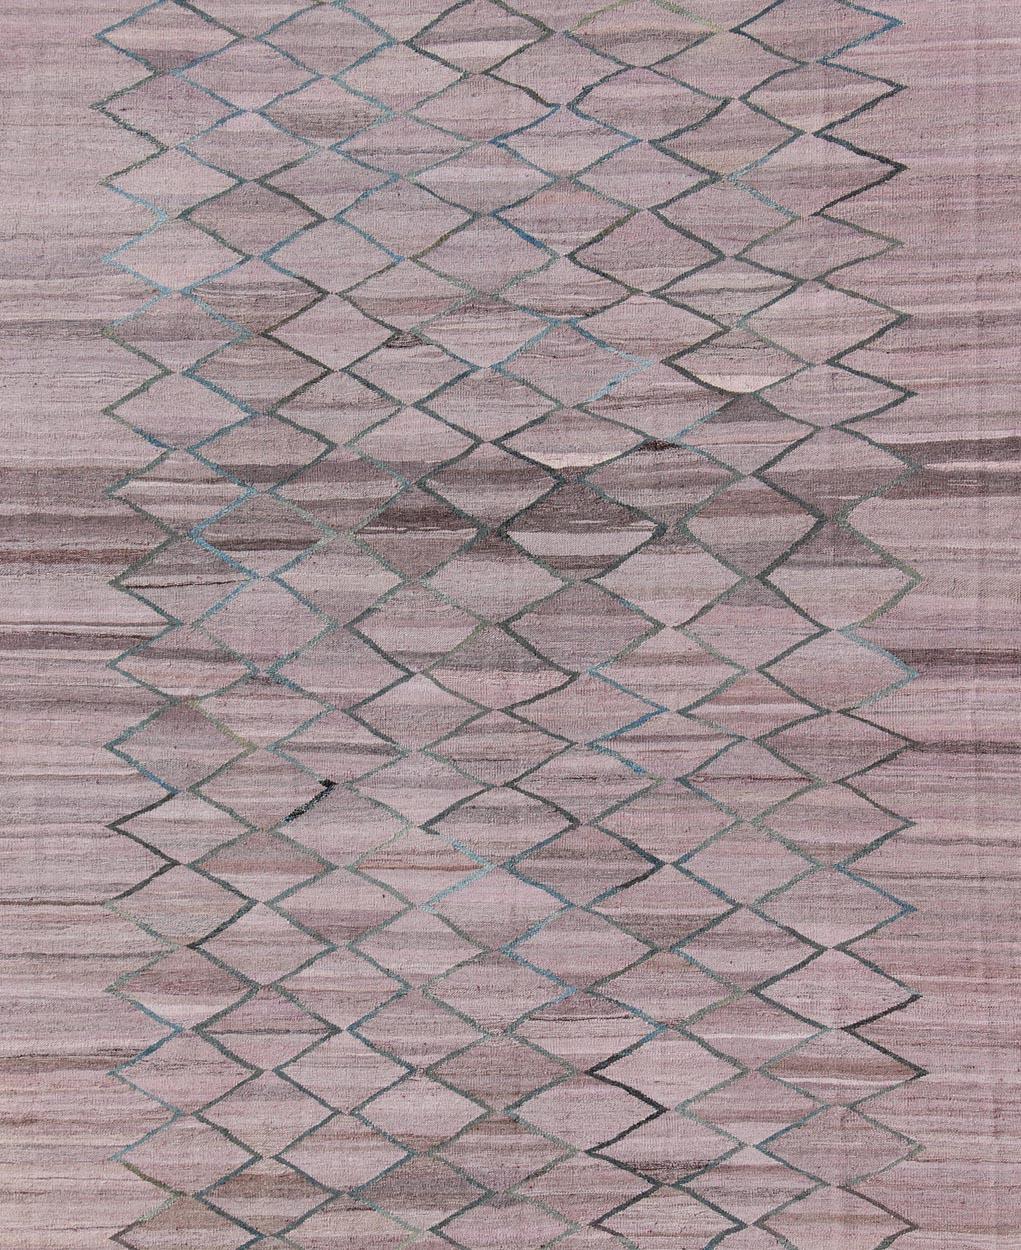 Afghan Minimalist Modern Flat-Weave Kilim Rug in Diamond Design  For Sale